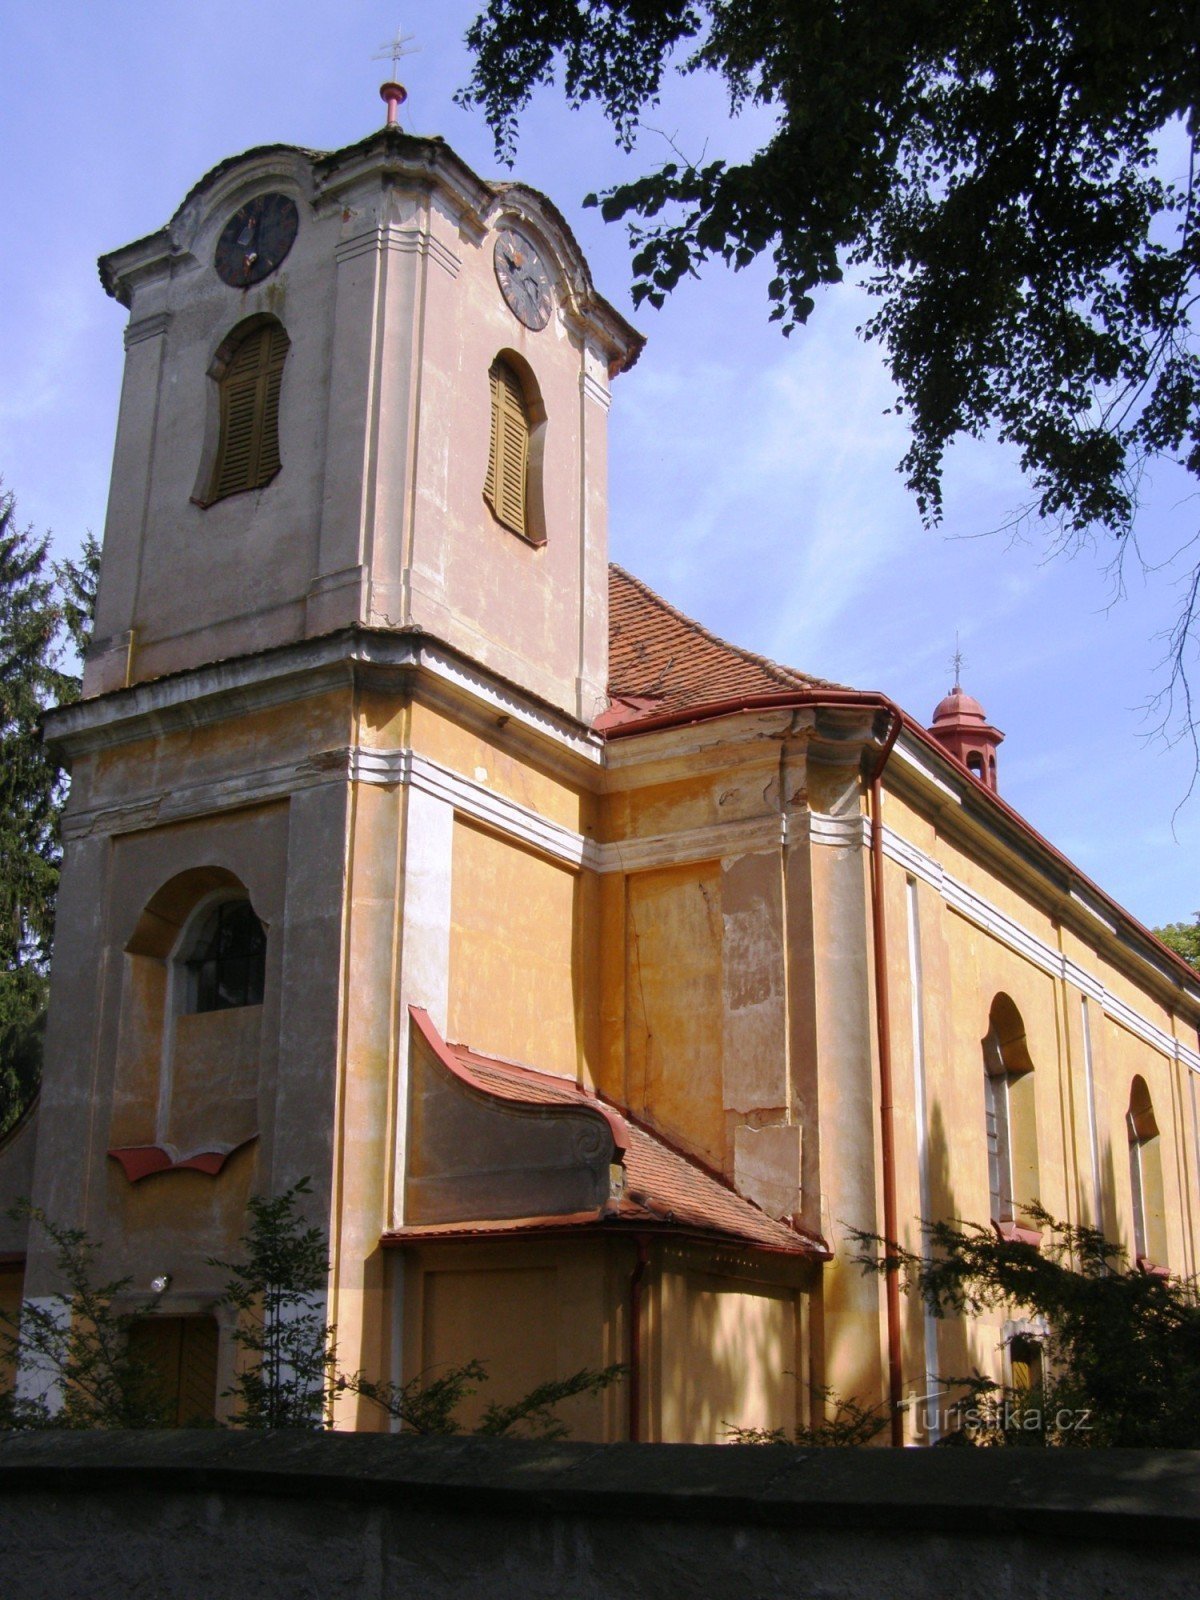 Knežice - church of St. Peter and Paul